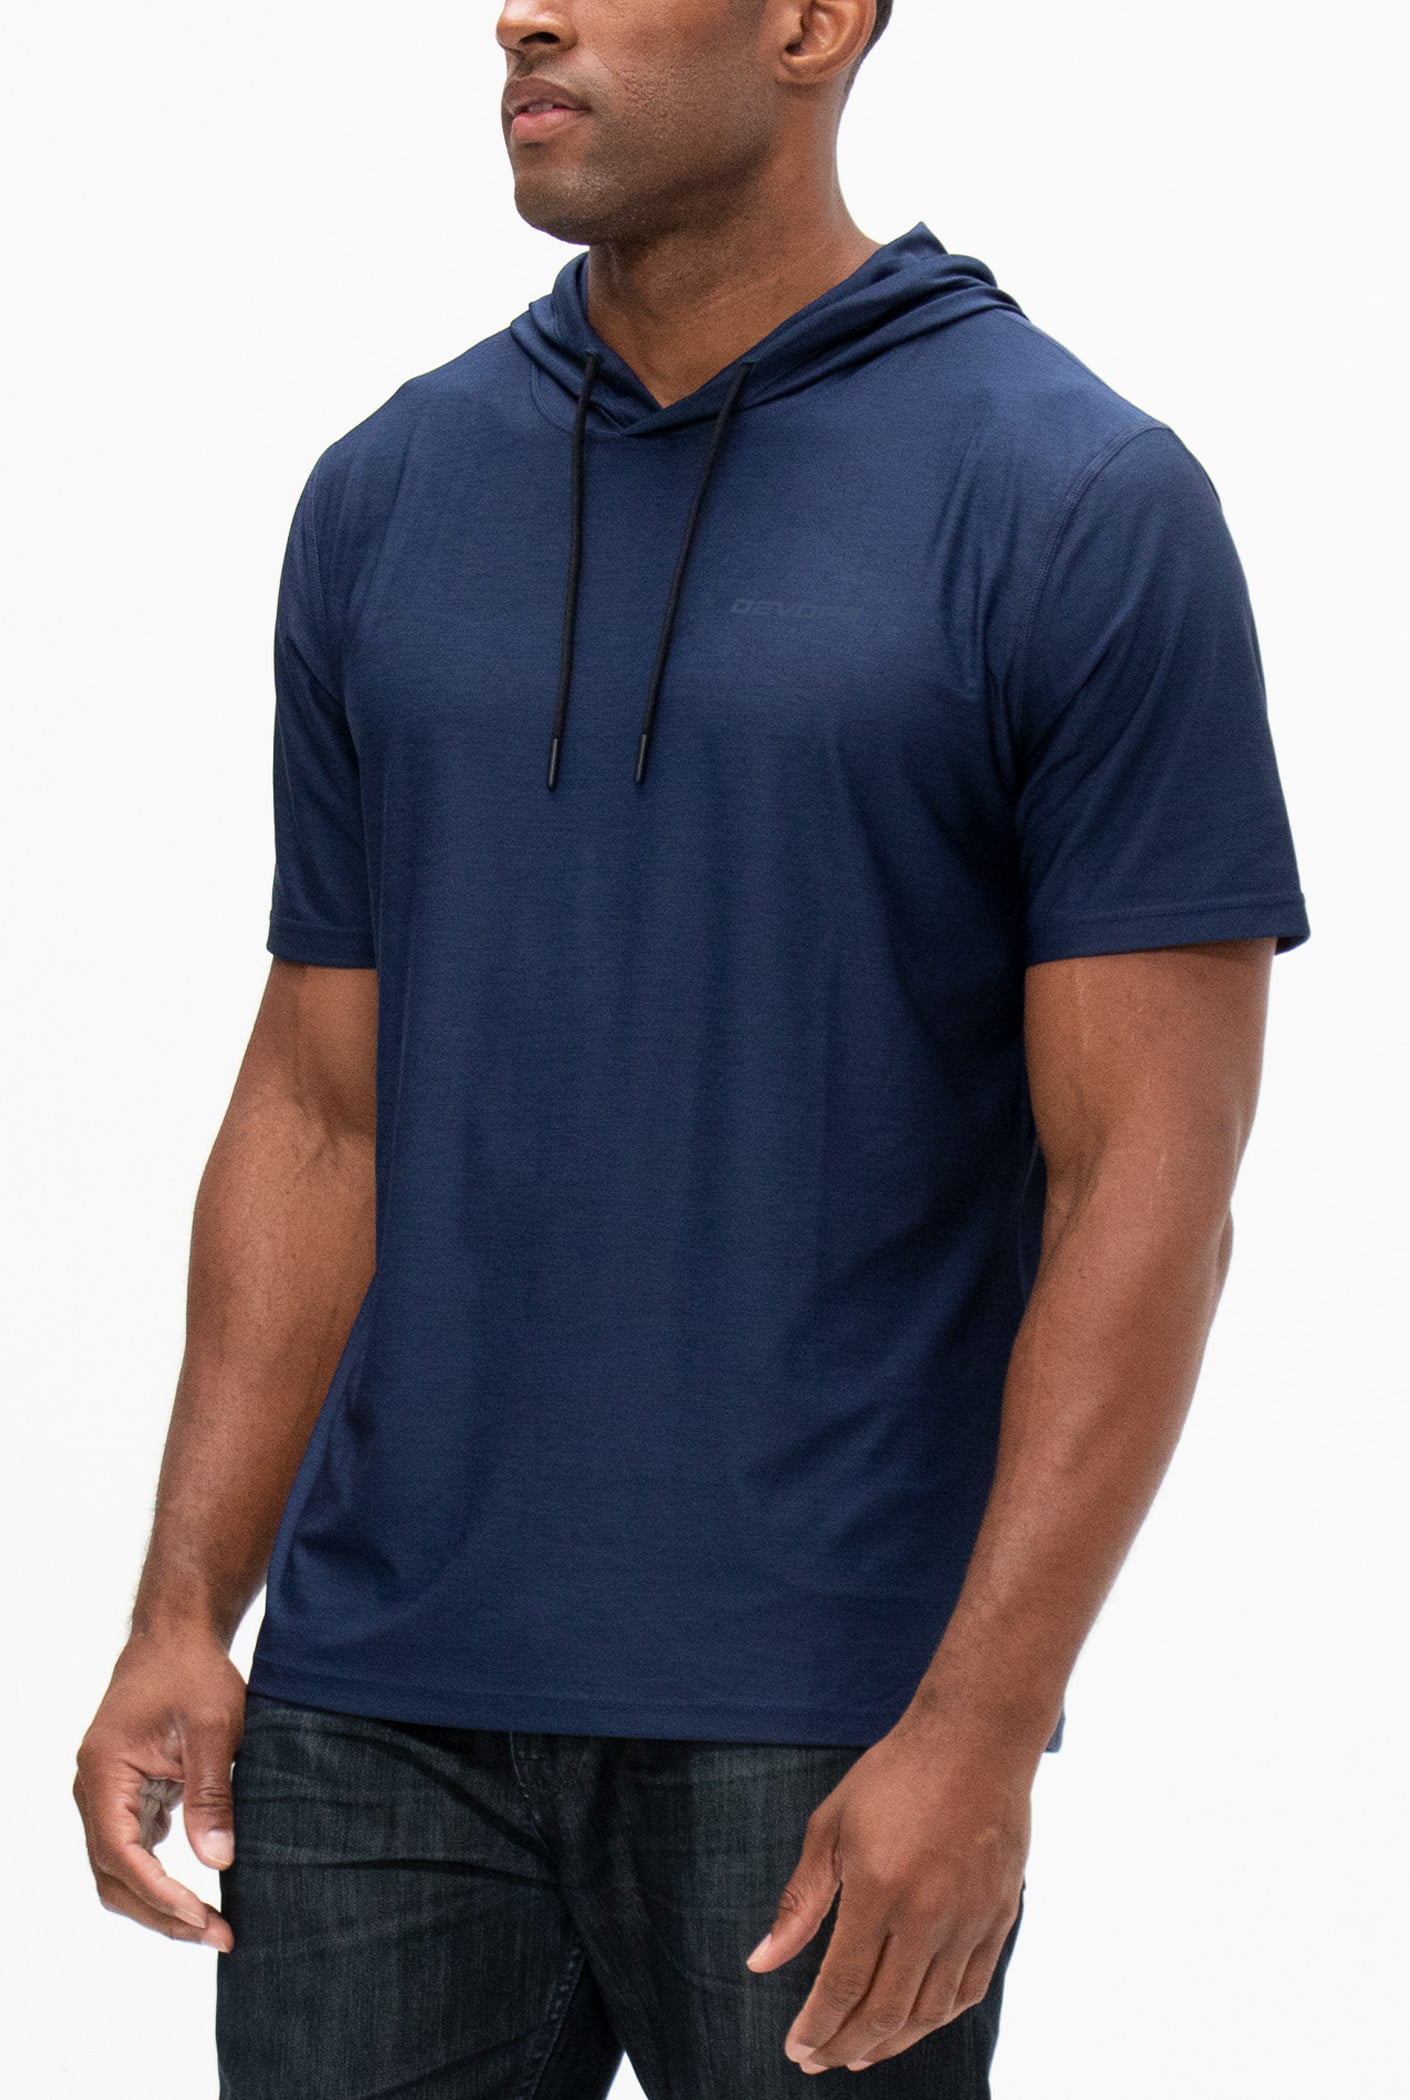 DEVOPS 3 Pack Men's Hoodie Short Sleeve Fishing Hiking Running Workout T- shirts (Large, Black/Blue/Red) 